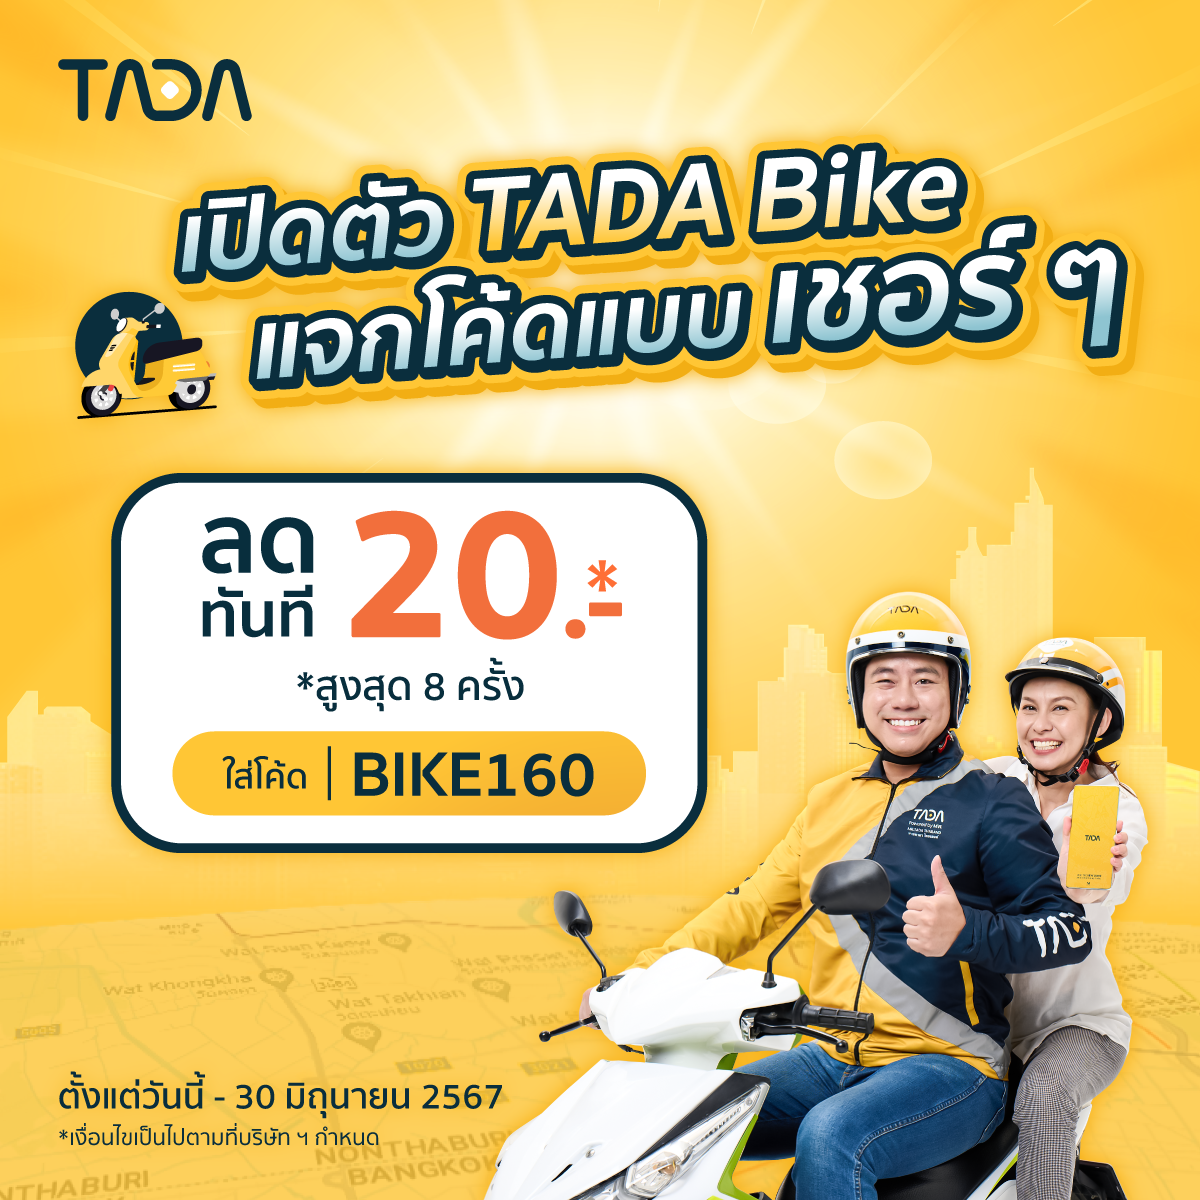 TADA เปิดตัวบริการเรียกรถจักรยานยนต์ใหม่ เพิ่มทางเลือกด้านการเดินทางสำหรับลูกค้าชาวไทย มอบโซลูชันการเดินทางที่คุ้มค่าพร้อมด้วยโปรโมชันเปิดตัวสุดพิเศษ 